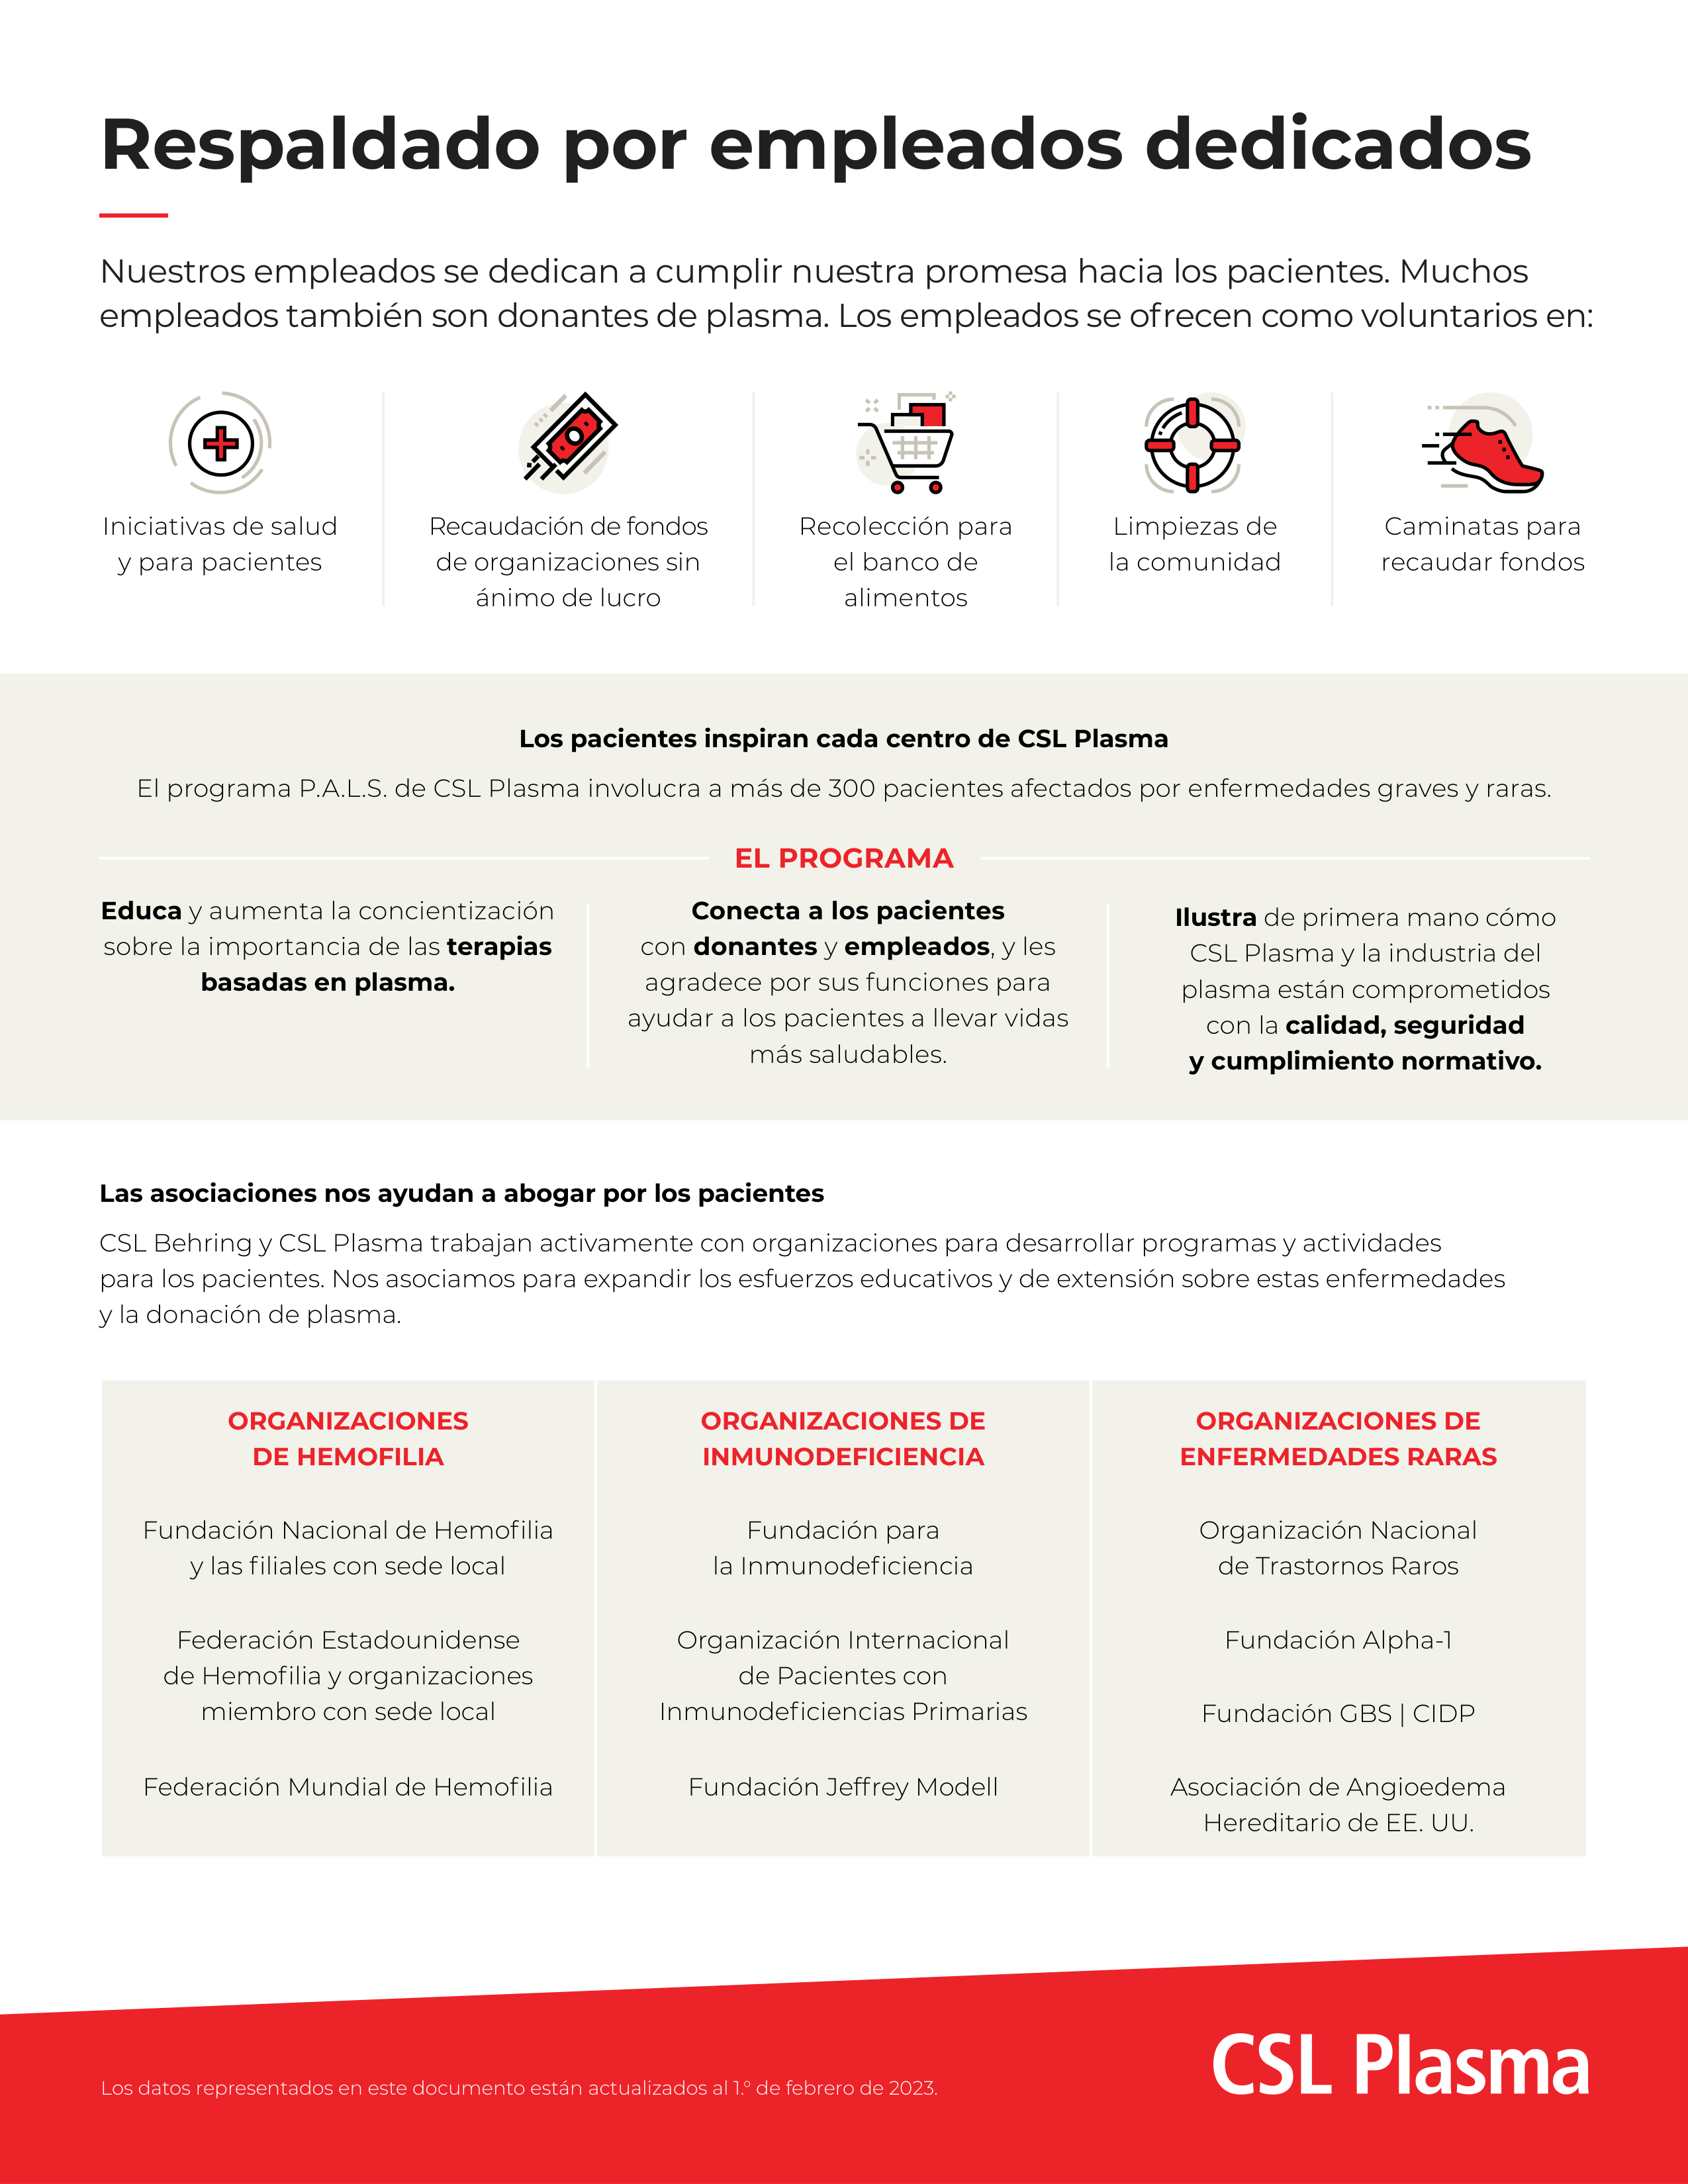 CSL Plasma dedicated employee infographic Spanish